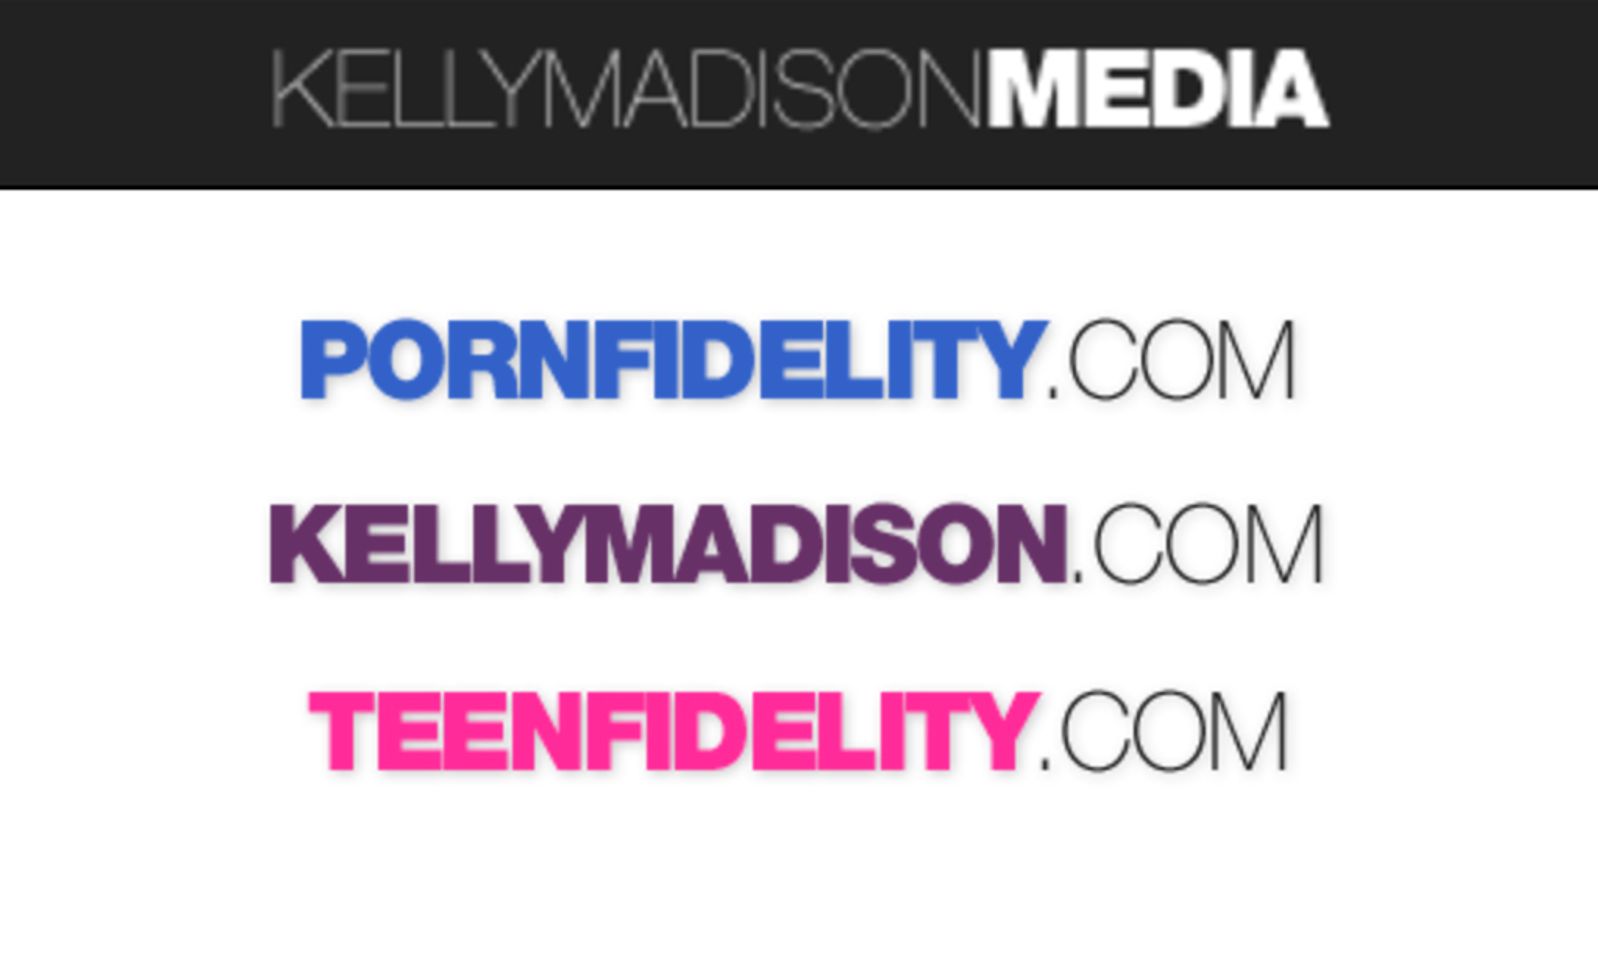 Kelly Madison Media to Ship 'Hard Passion 2' on September 17